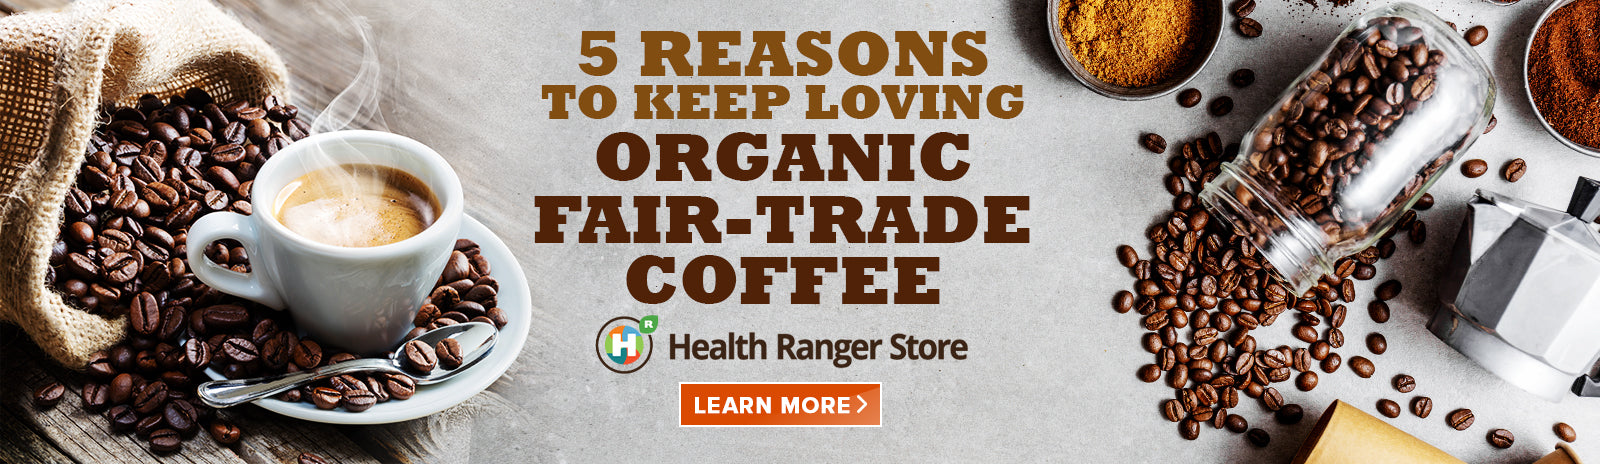 Reasons to keep loving organic fair-trade coffee